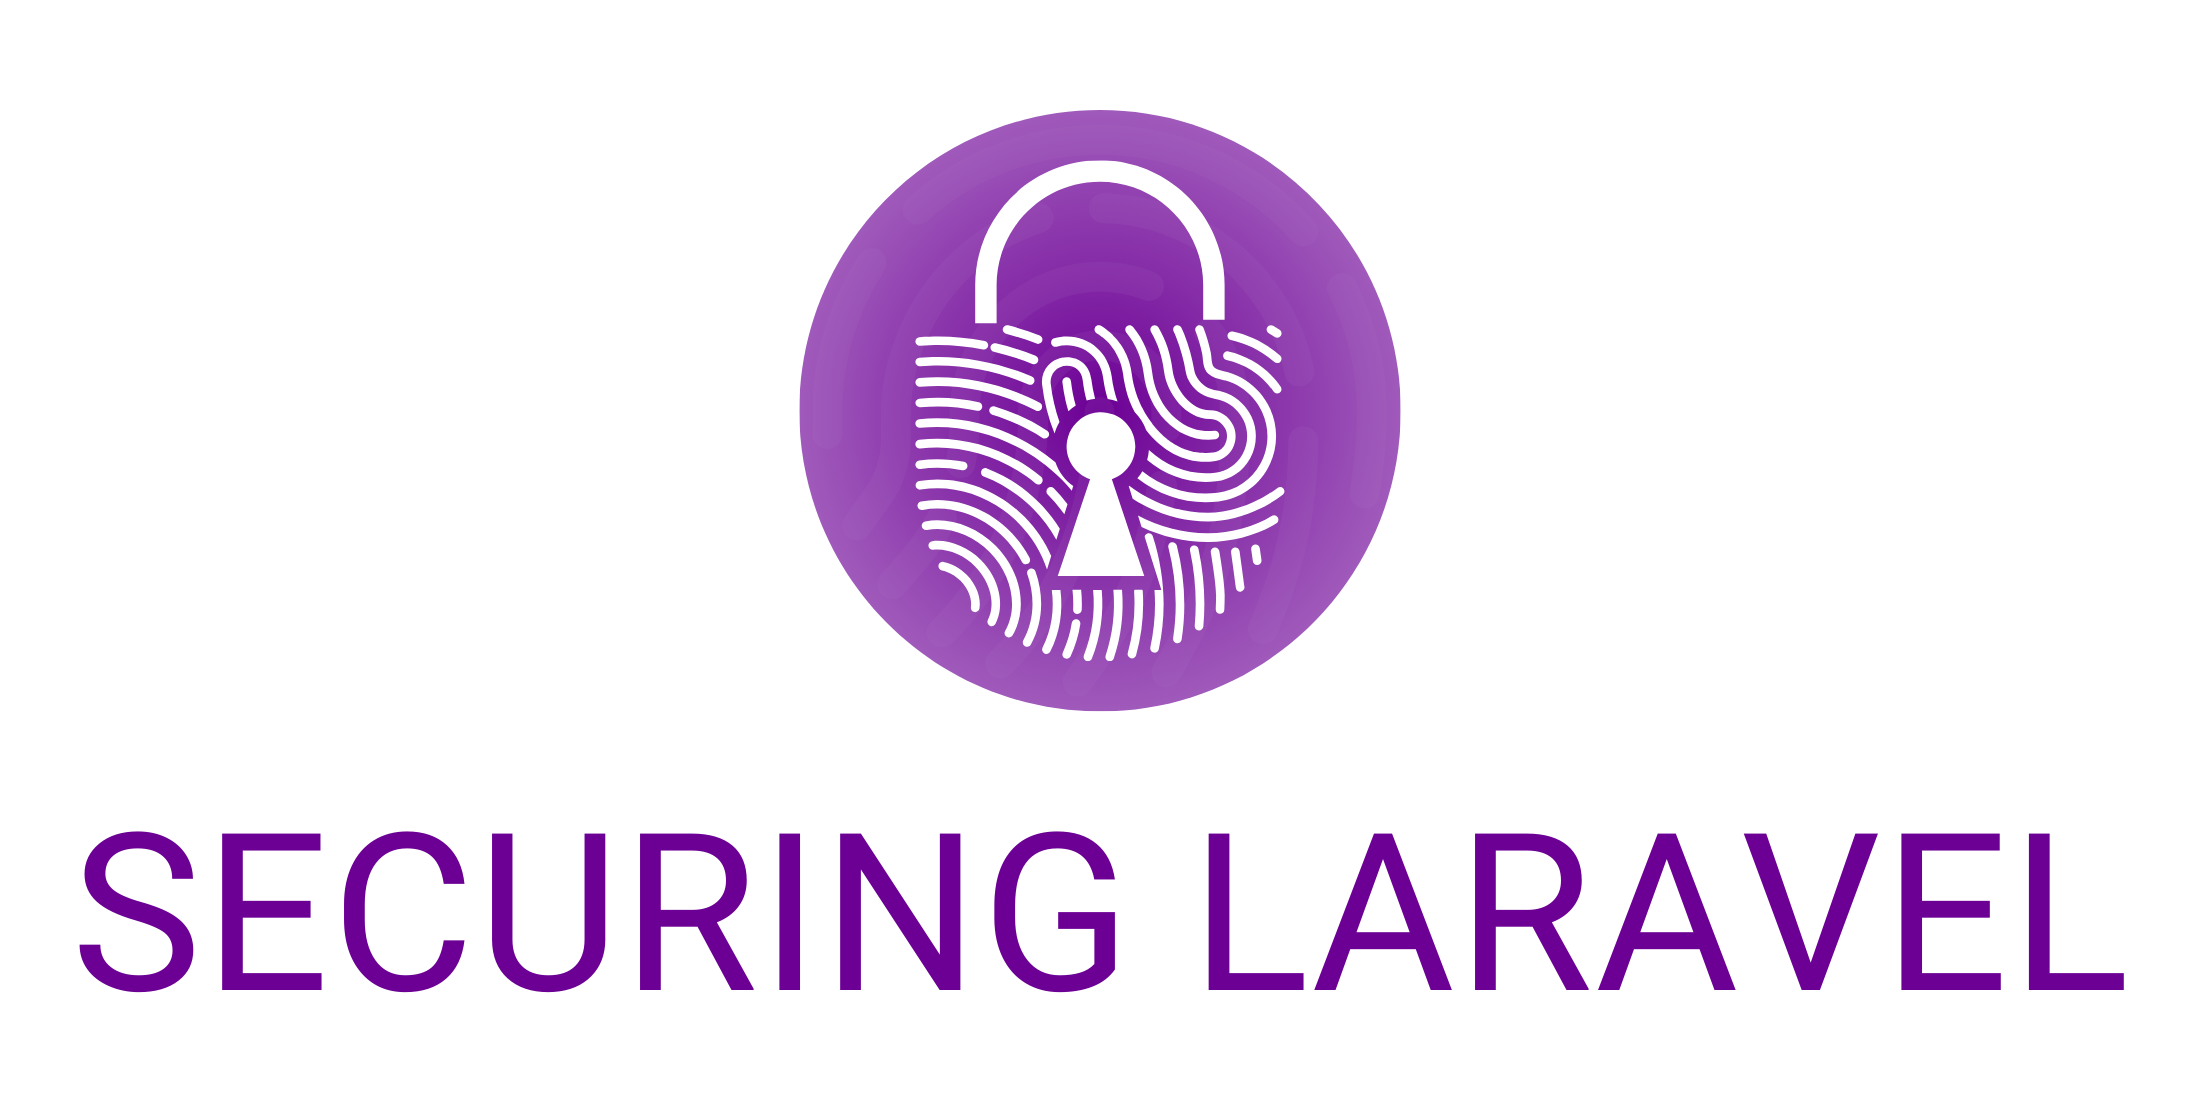 Securing Laravel image